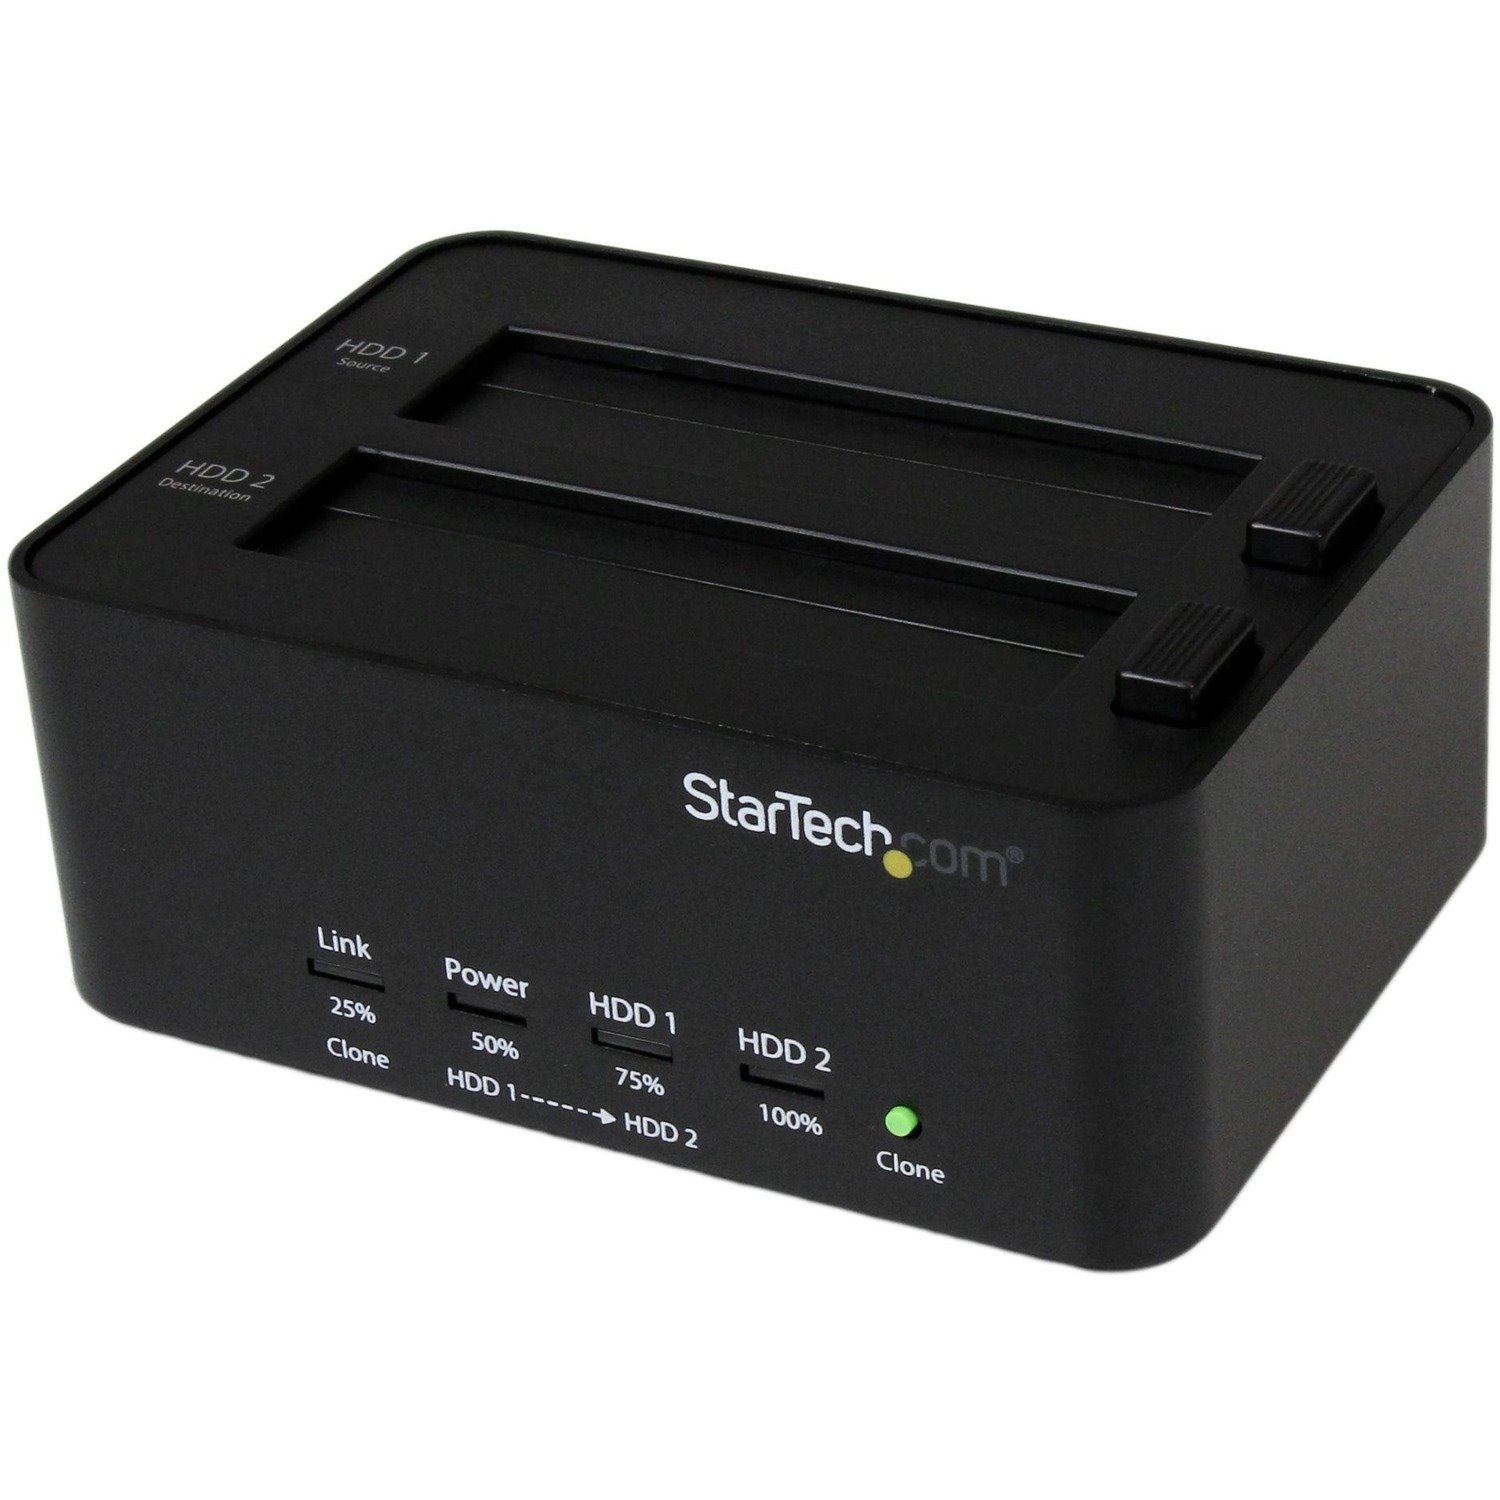 StarTech.com Hard Drive/Solid State Drive Duplicator